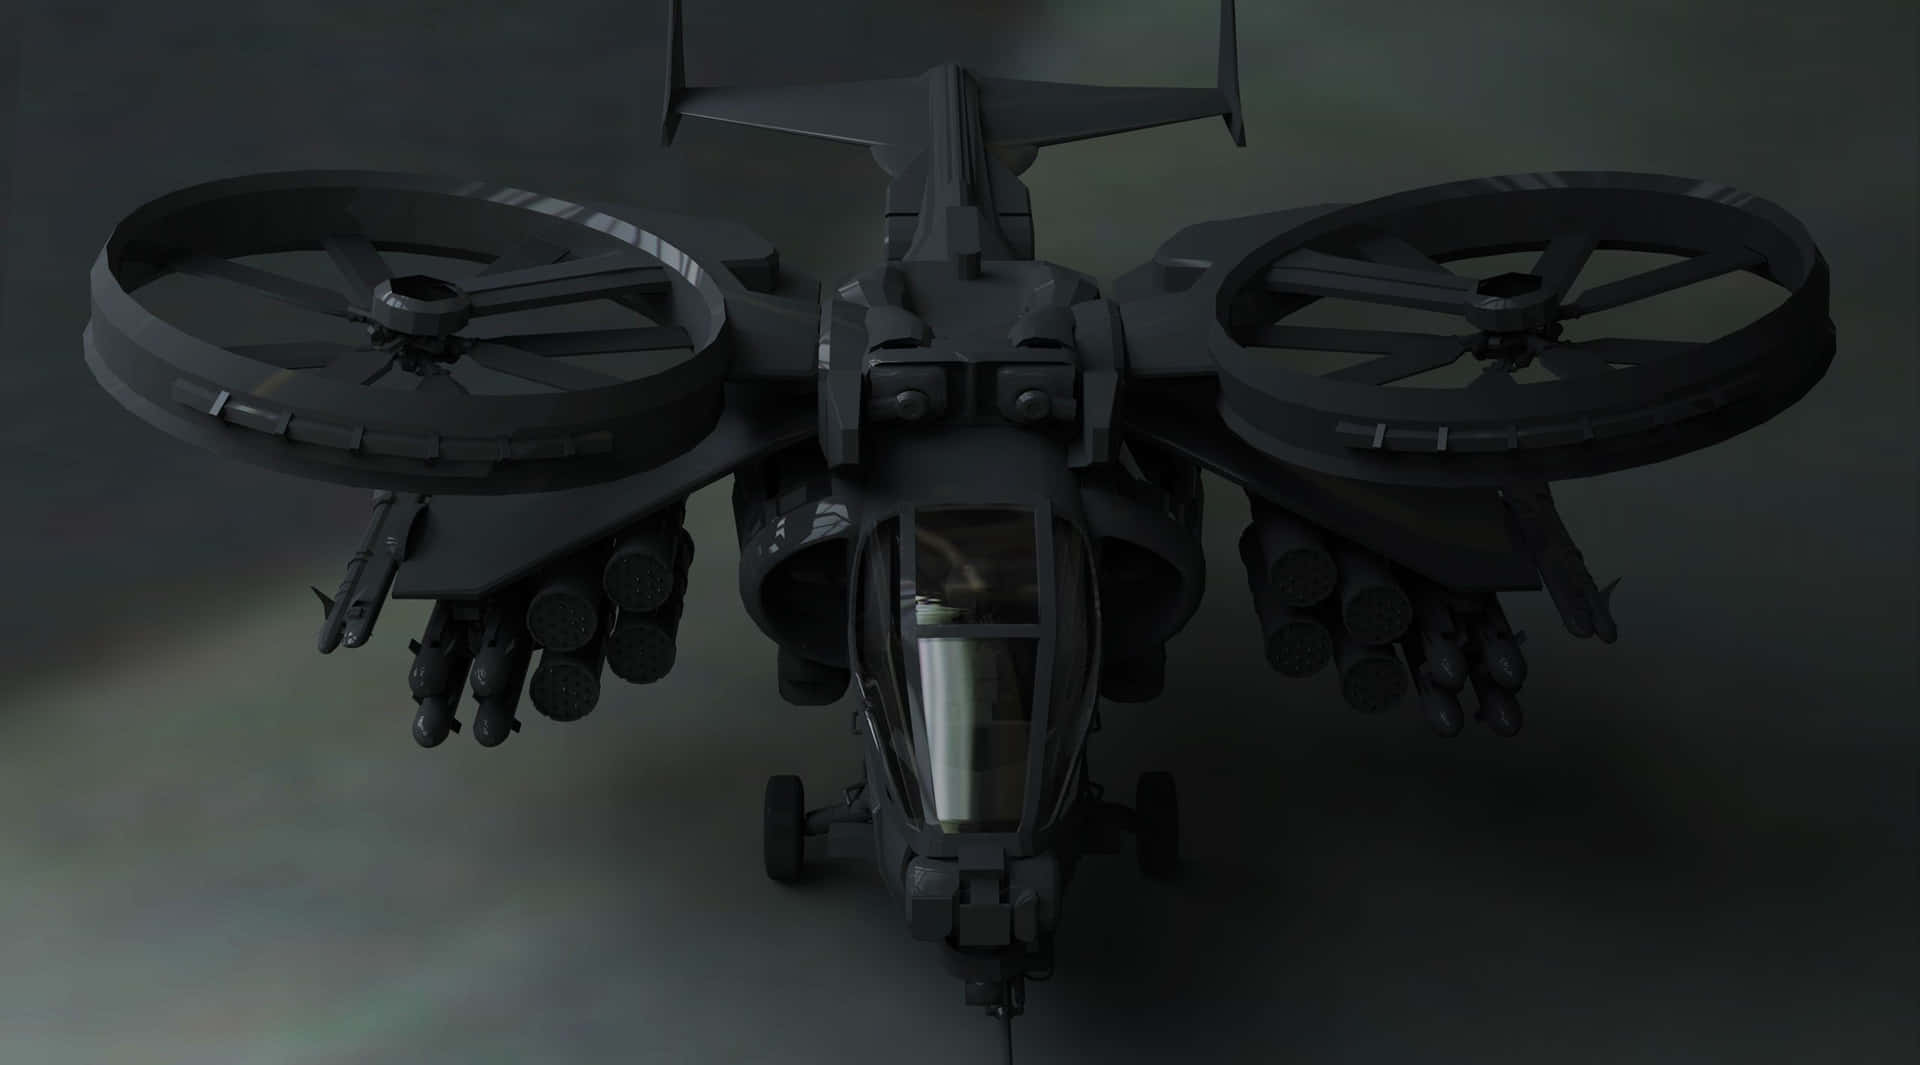 A fierce Scorpion tank advances in the Halo universe. Wallpaper